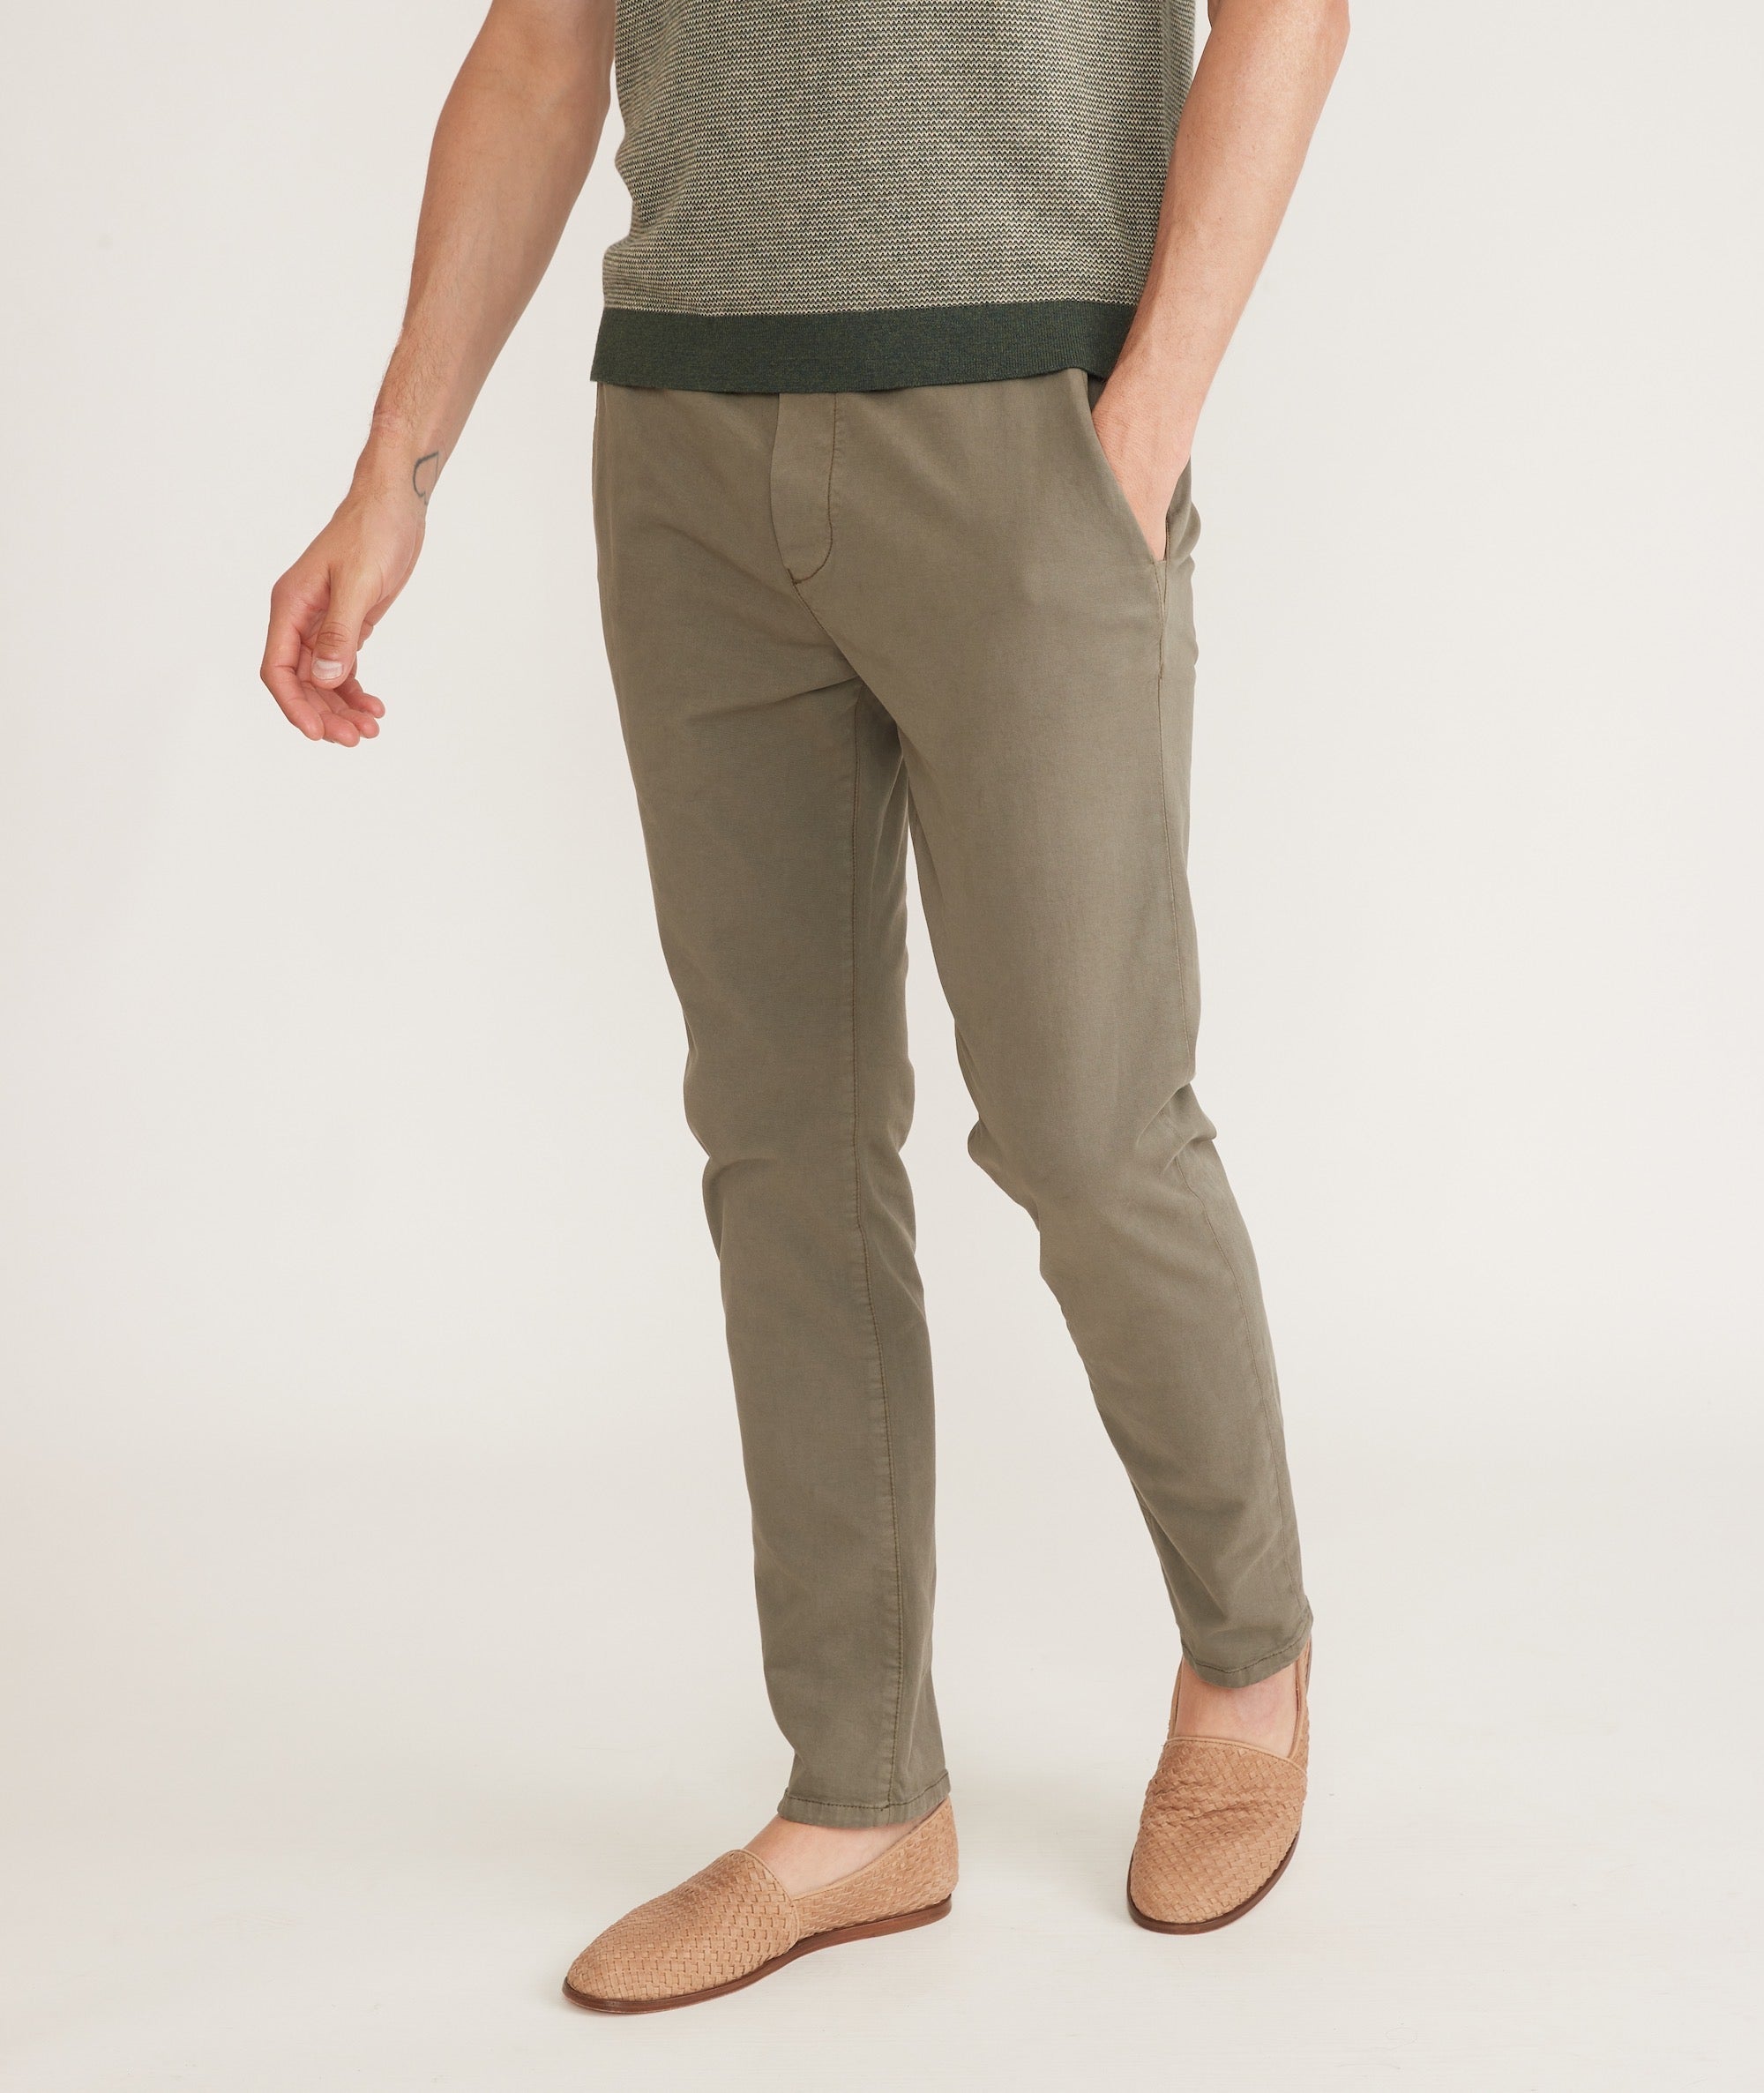 Buy Men Black Check Slim Fit Formal Trousers Online - 790363 | Peter England